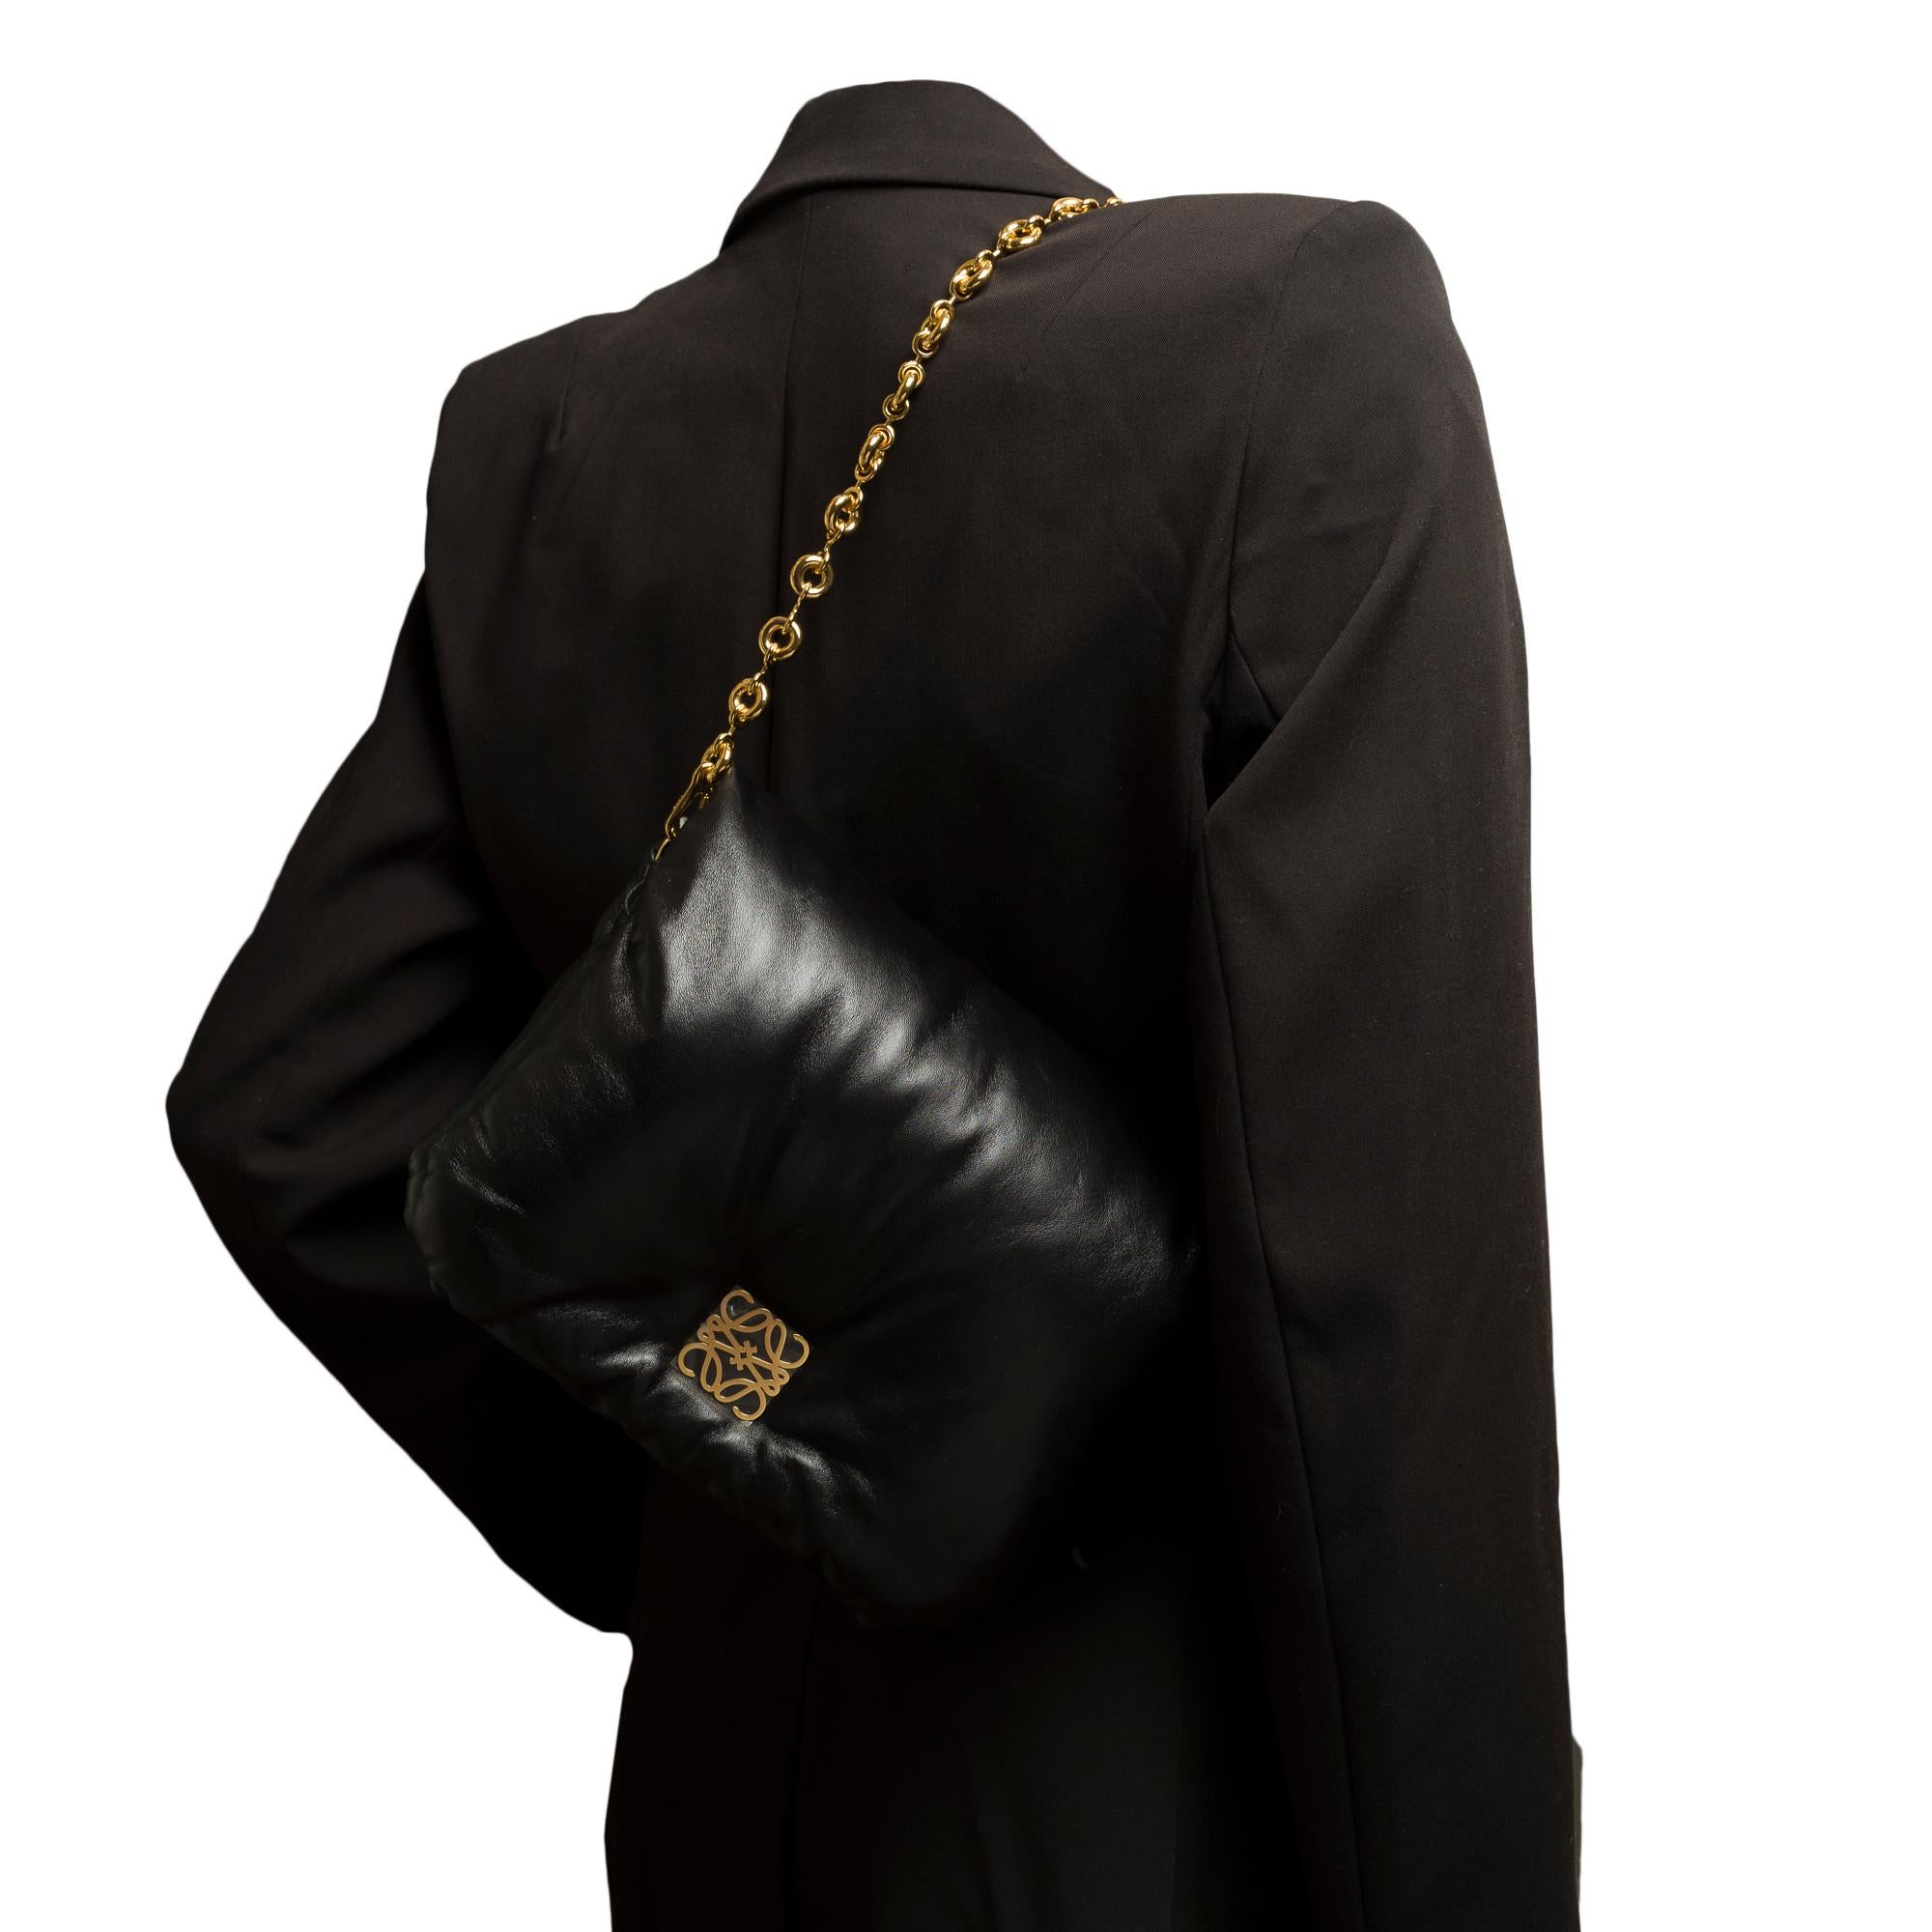 New Loewe Goya Puffer shoulder bag in black shiny lambskin leather, GHW 6